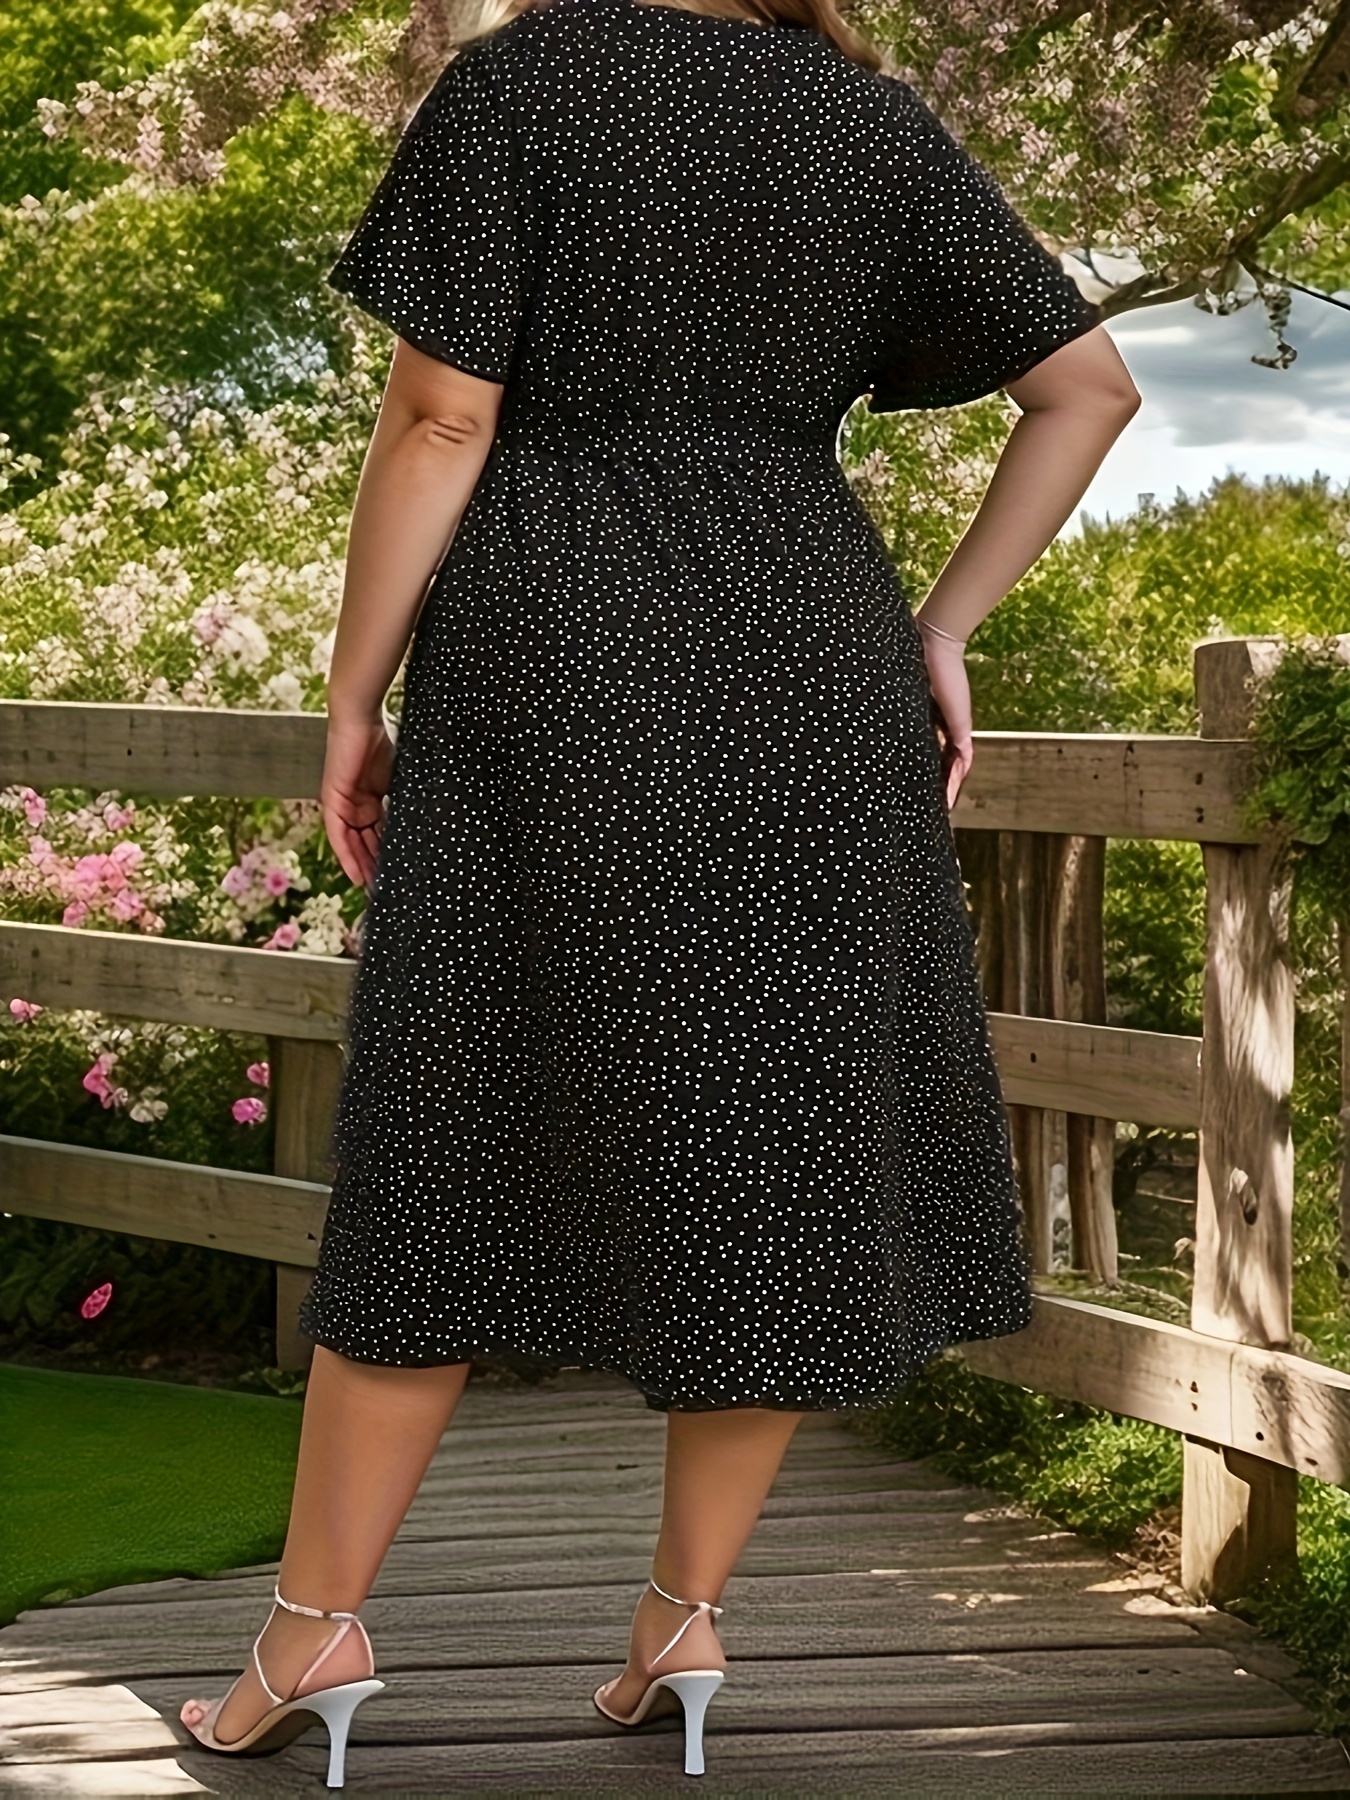 Polka Dot Mini Black Dress - Plus Size